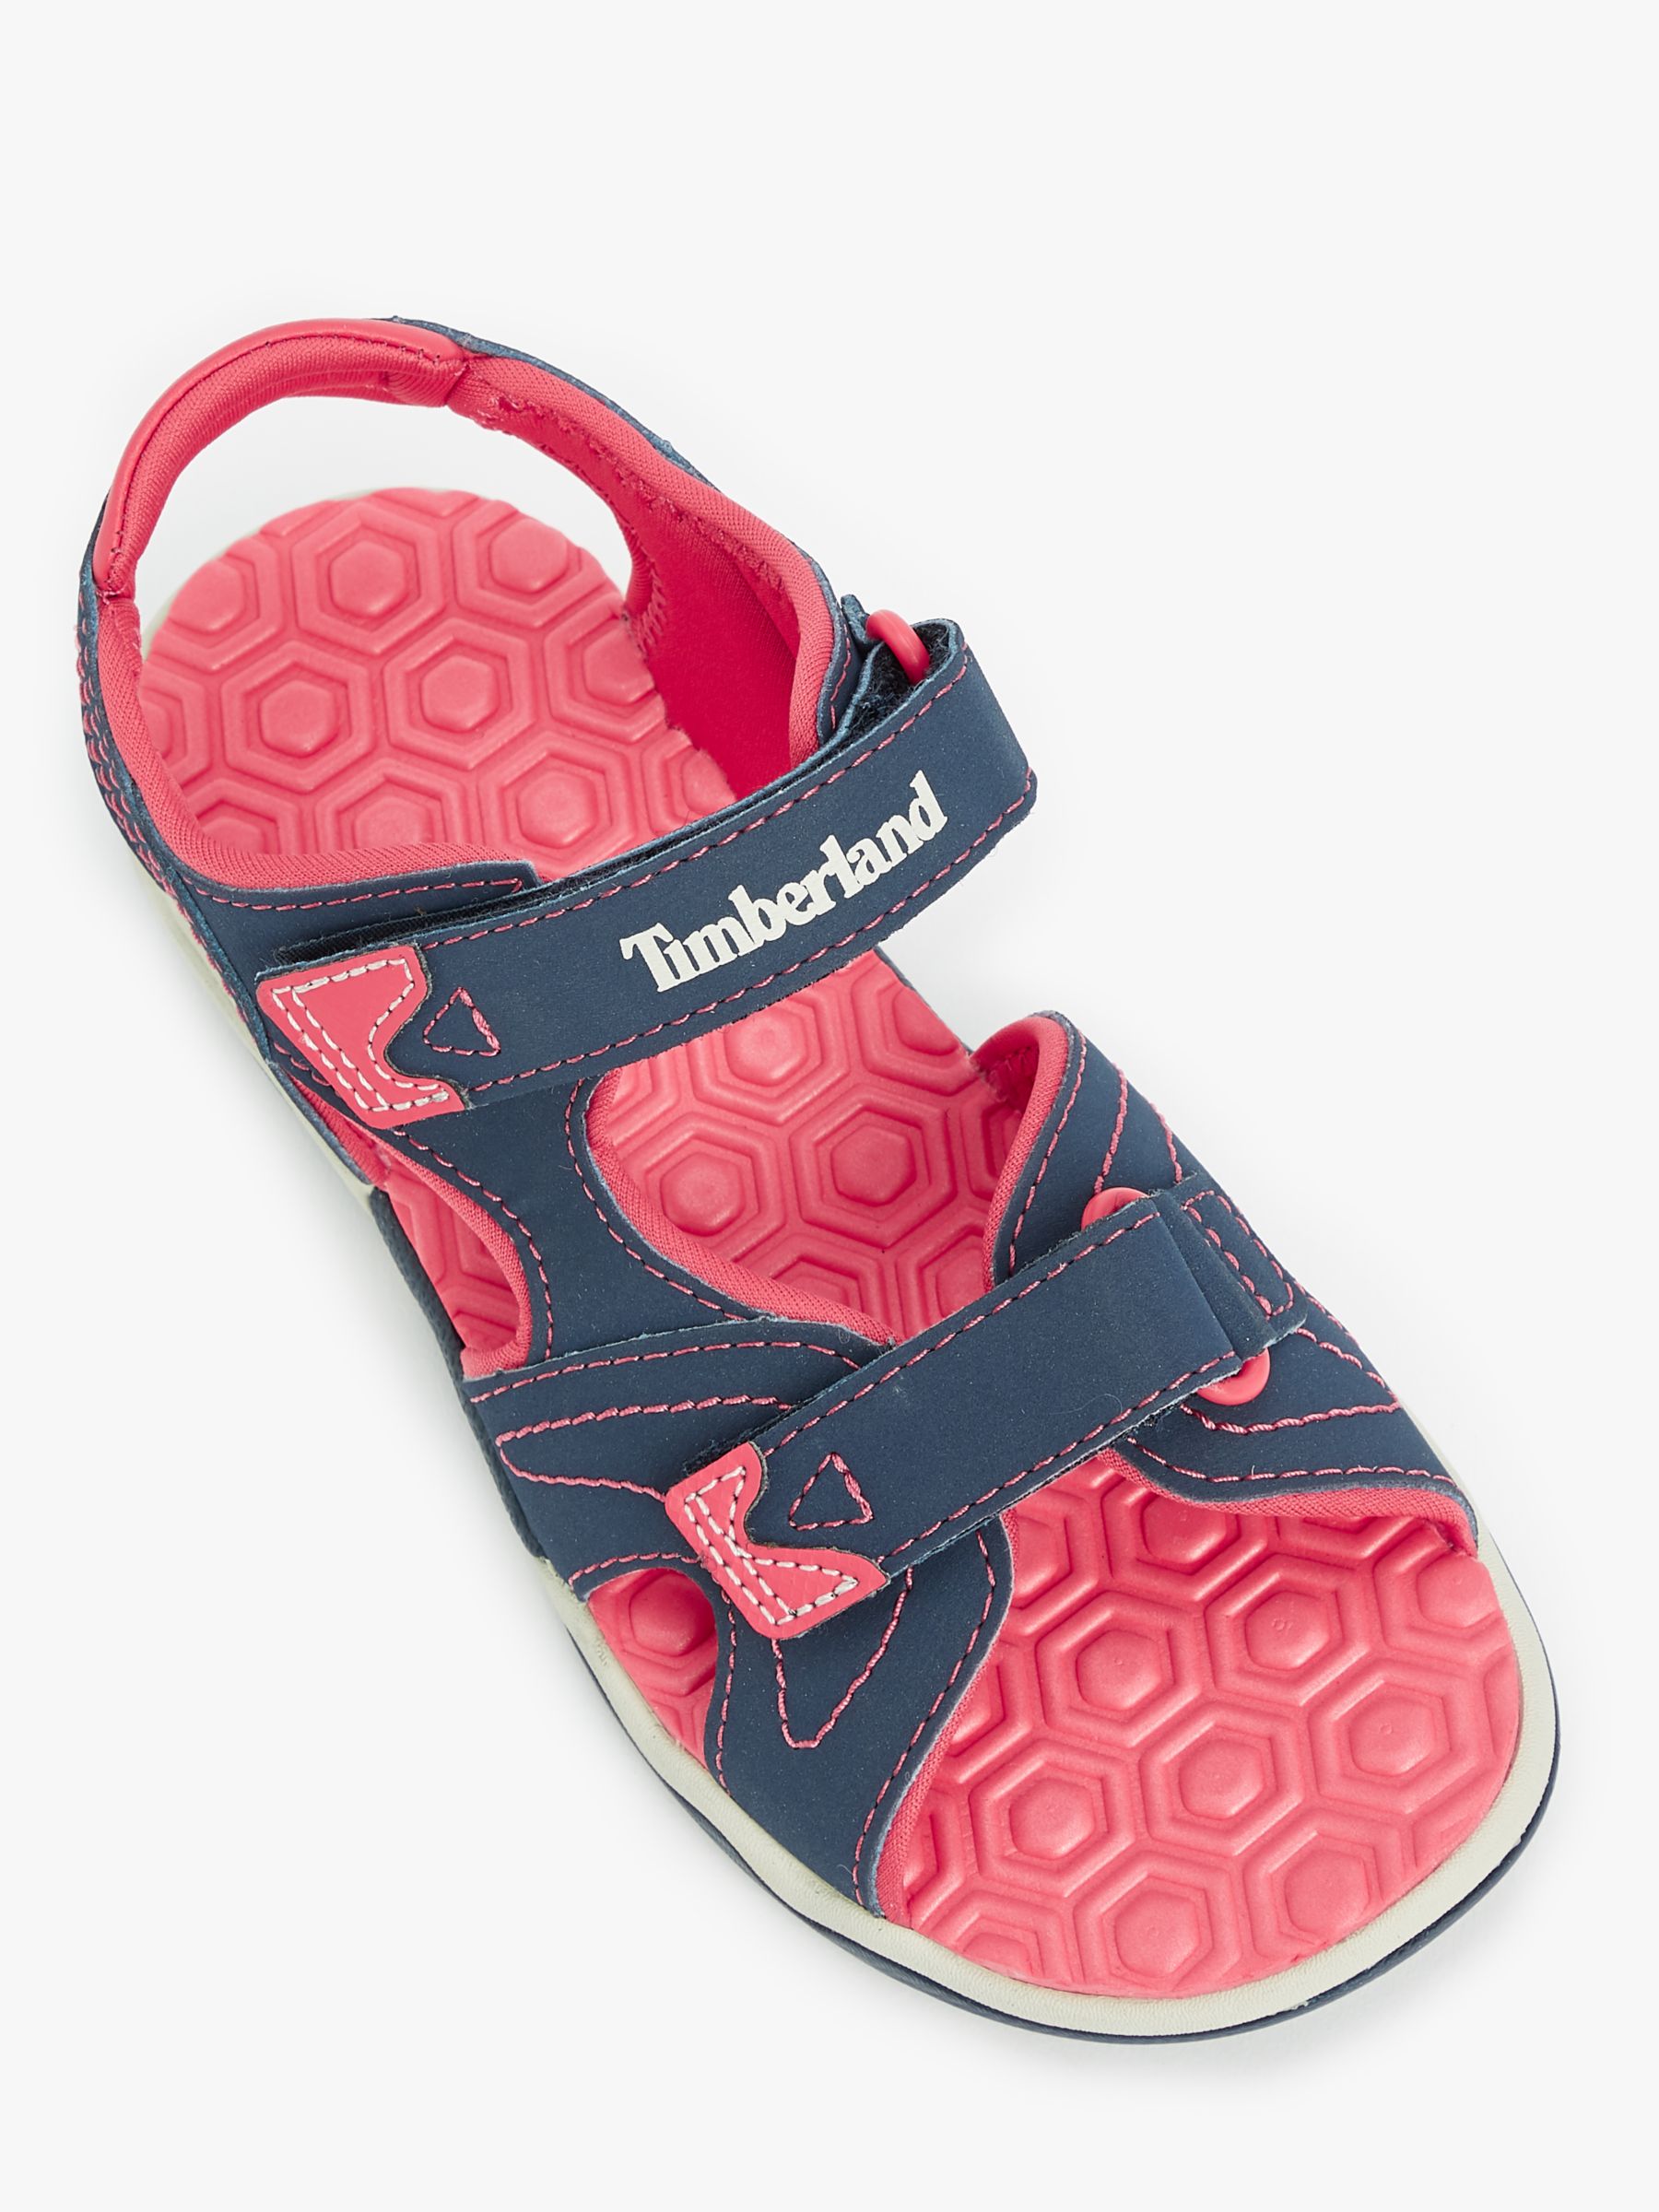 Preciso Persuasivo miércoles Timberland Children's Adventure Seeker Riptape Sandals, Pink/Navy at John  Lewis & Partners